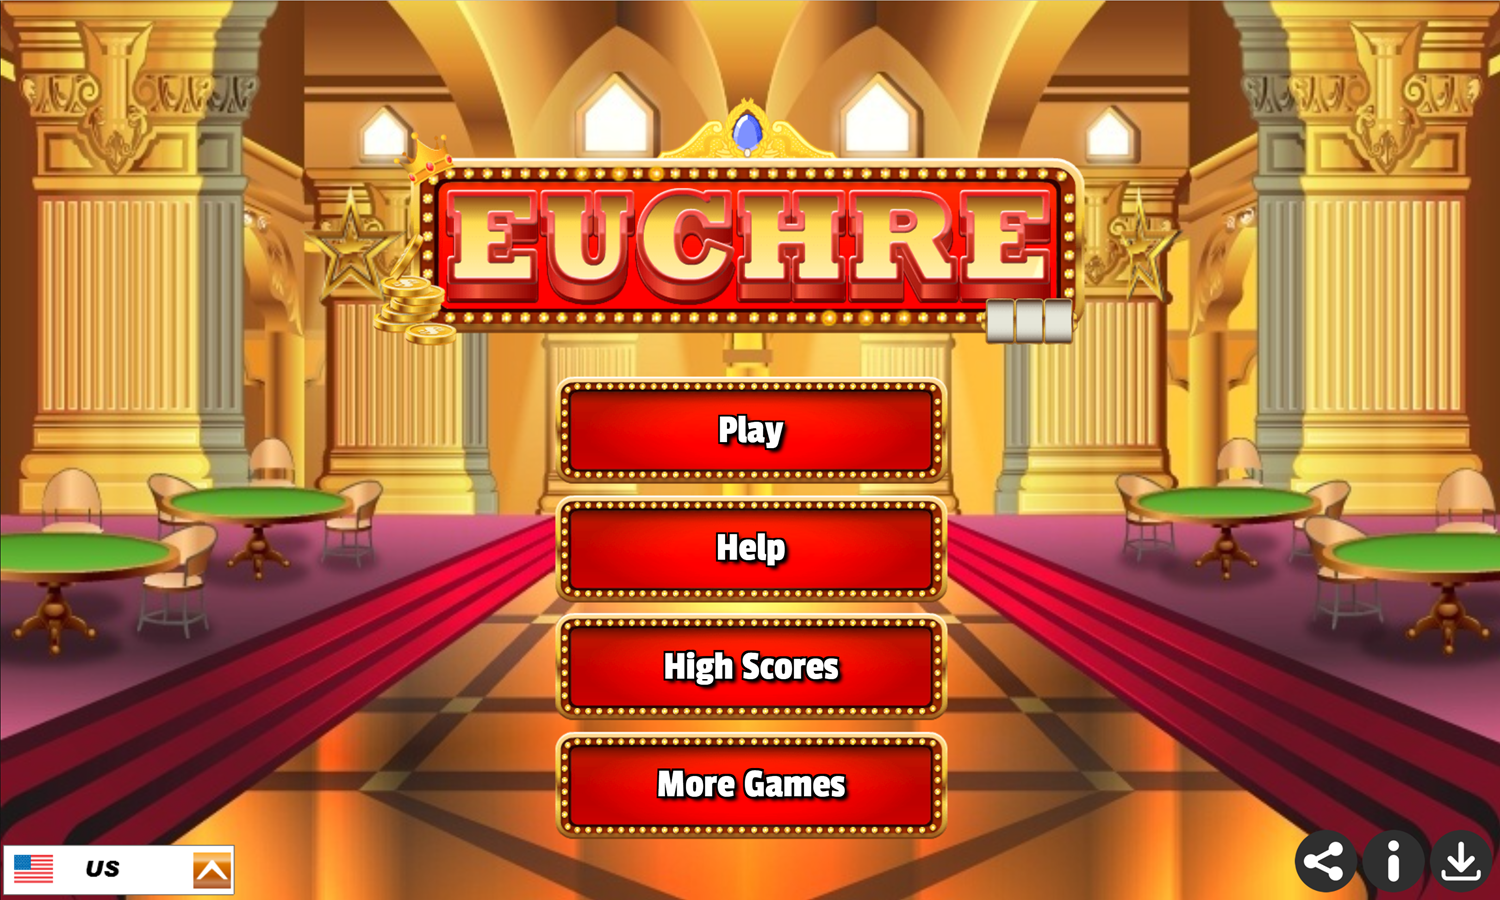 Euchre Game Welcome Screen Screenshot.